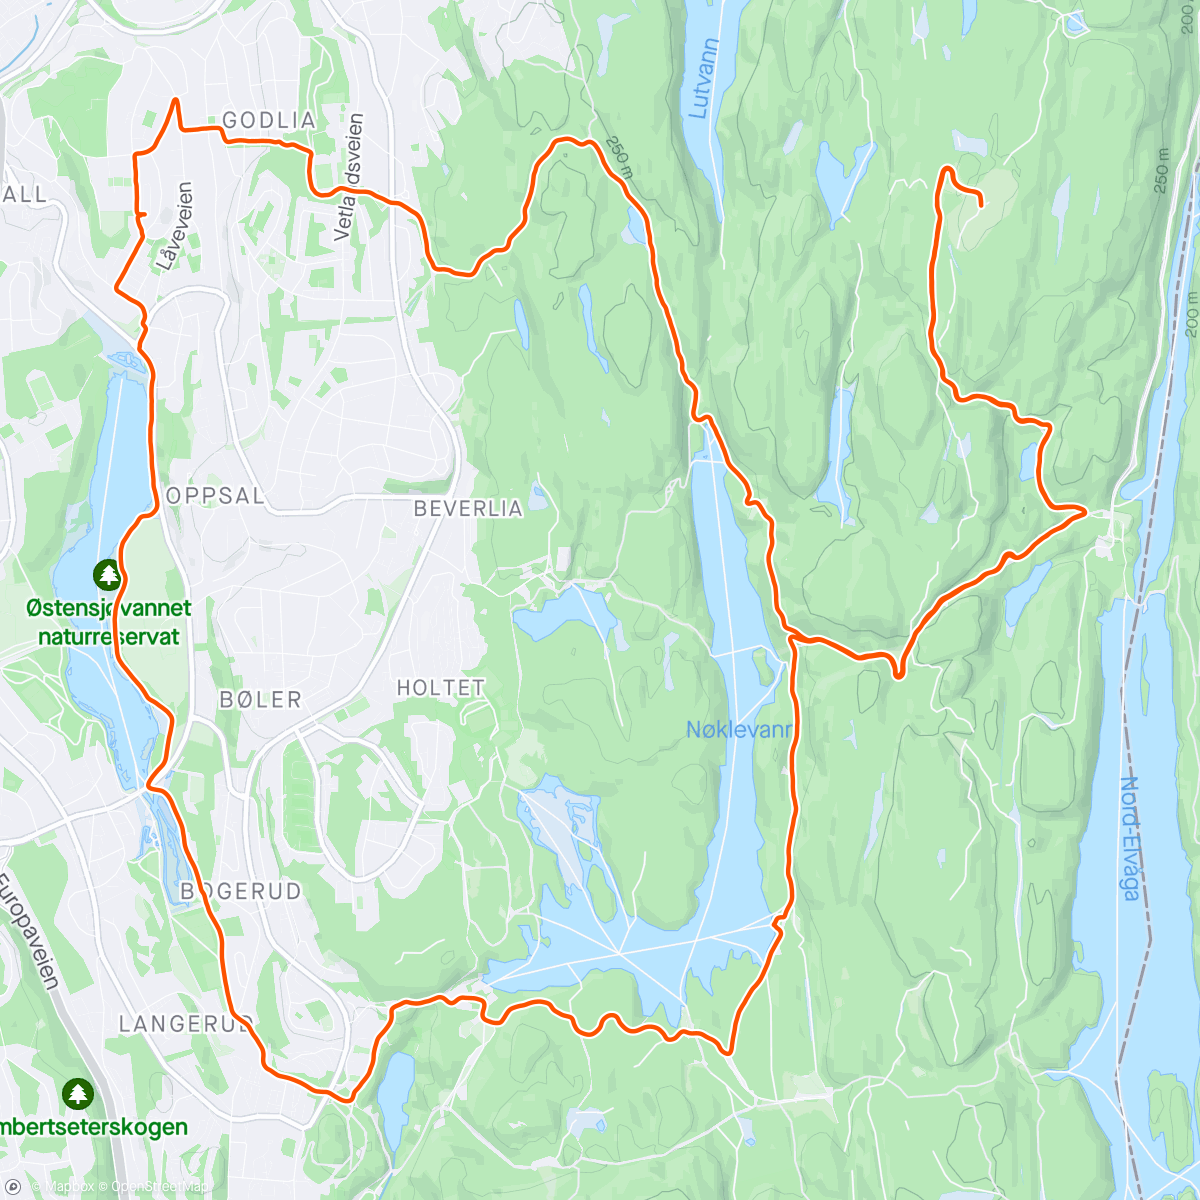 「Kortreist halvmara innom Haukåsen」活動的地圖